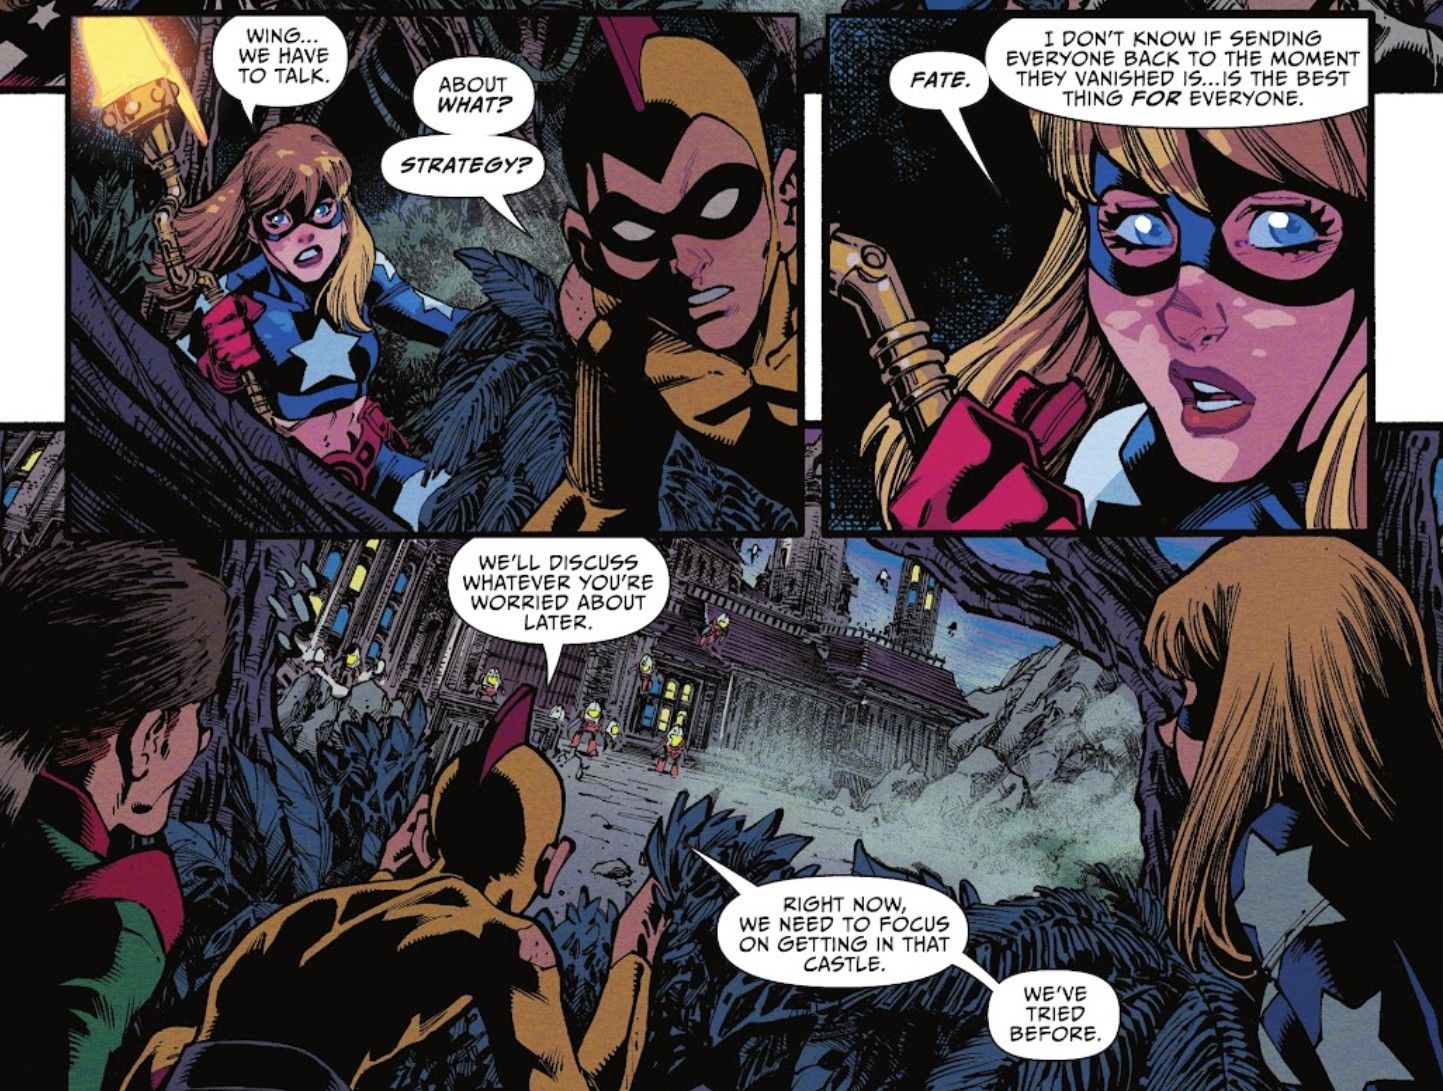 Stargirl Admits She Doesn't Think Sending DC's Lost Sidekicks Back Is the Best Choice